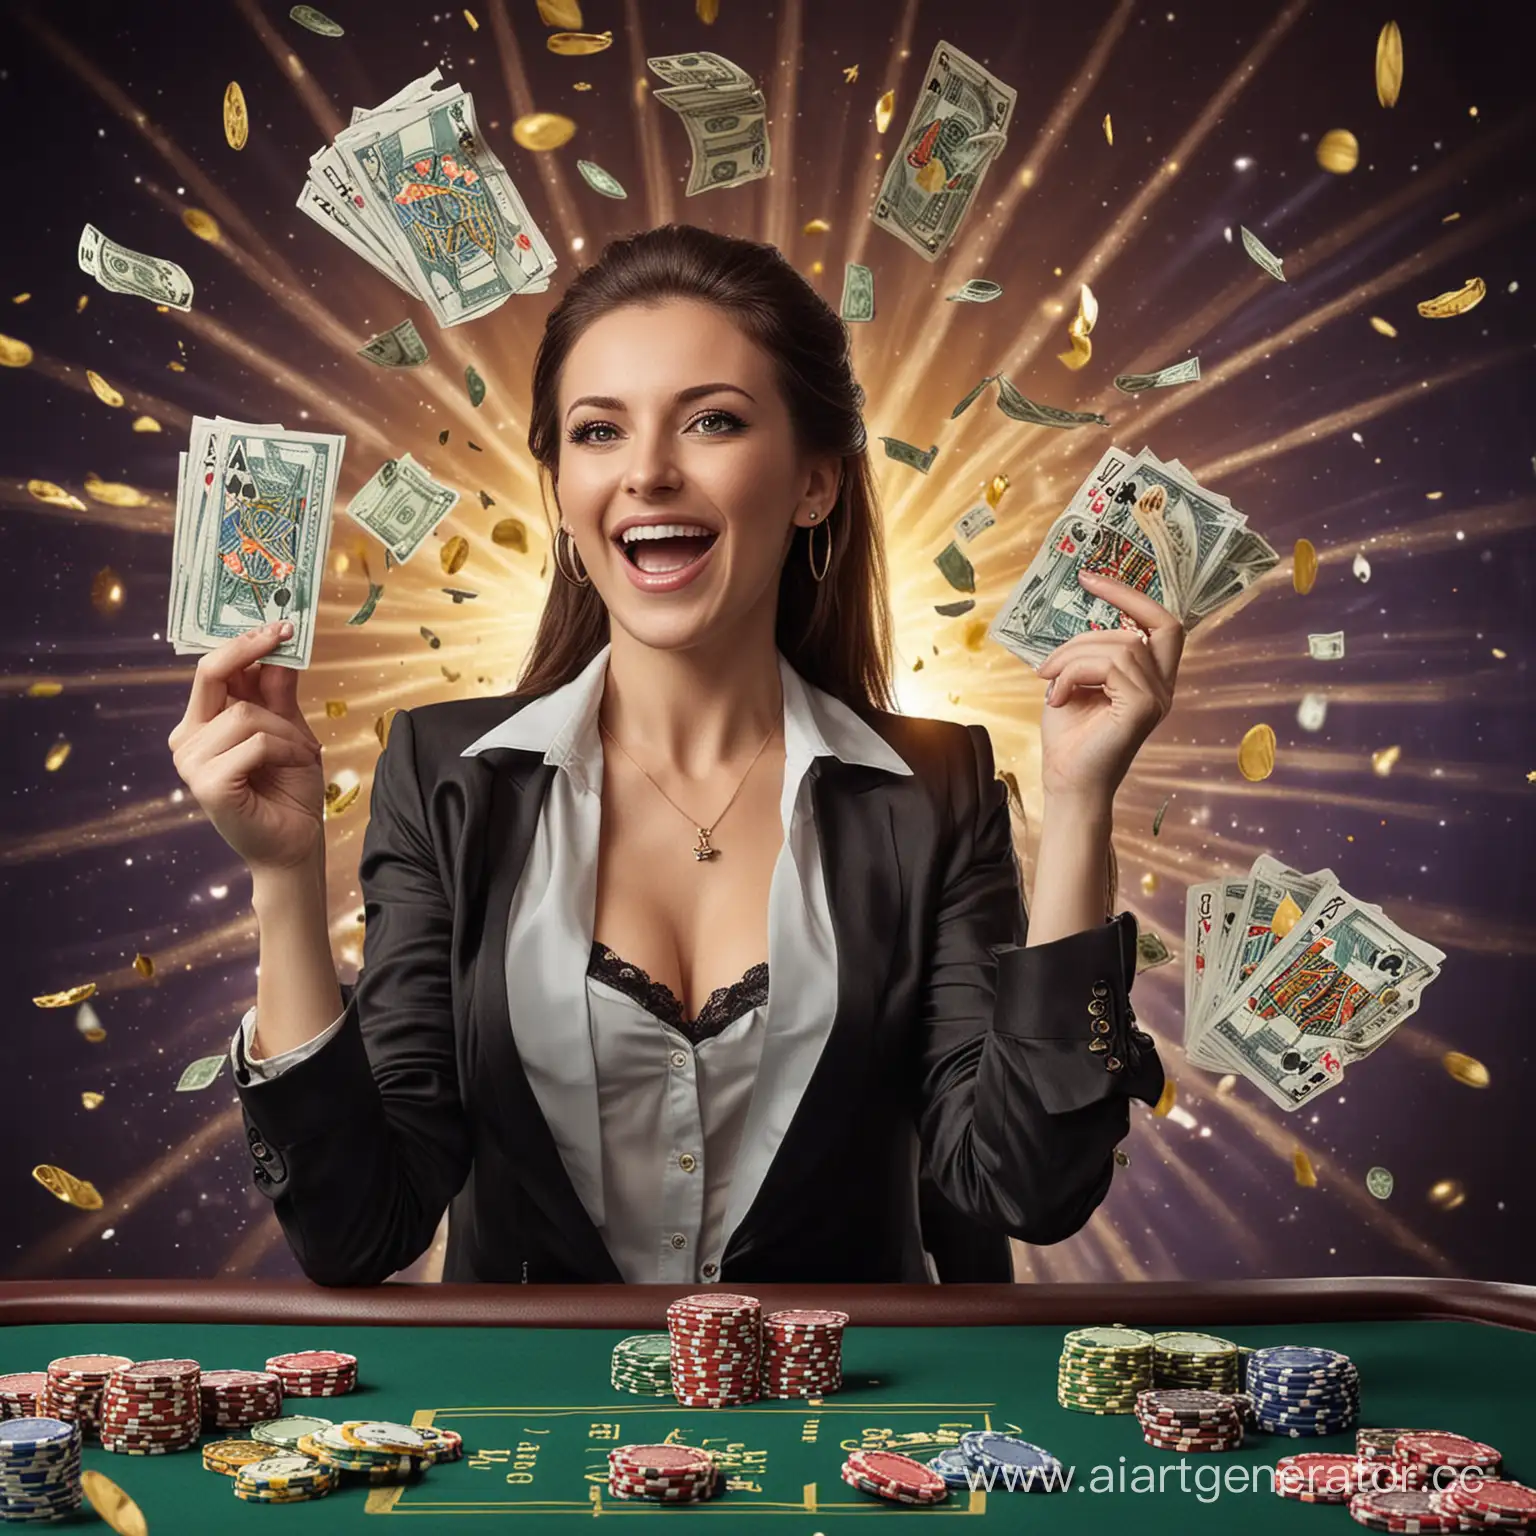 Joyful-Casino-Celebration-with-Winning-Streaks-and-Piles-of-Chips